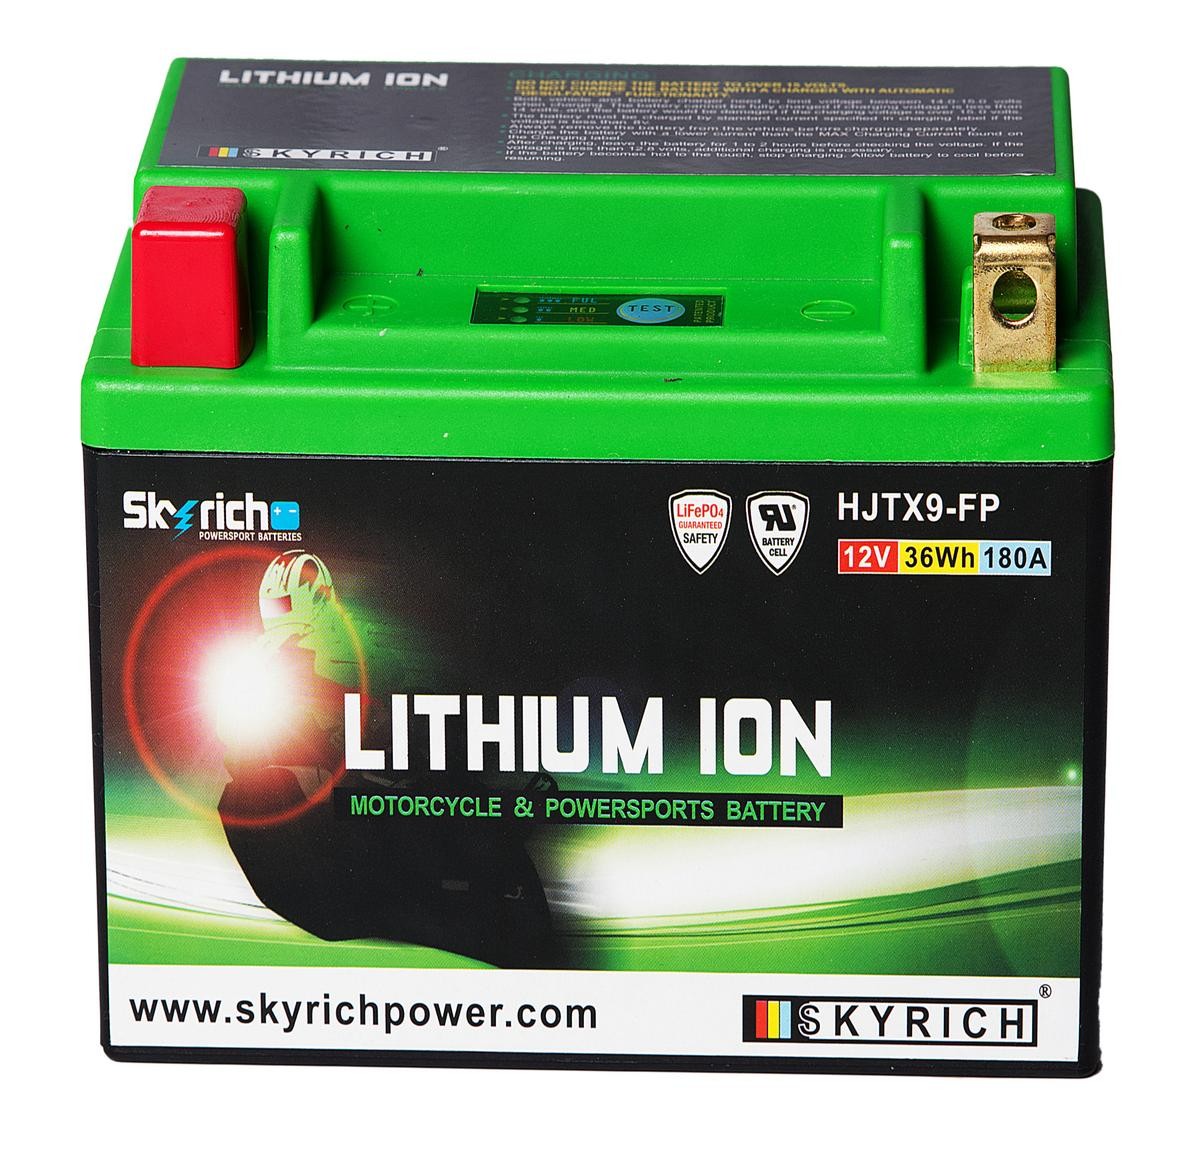 KYMCO BET AND WIN Batterie 12V 3Ah 180A N Li-Ionen-Batterie SKYRICH LITHIUM ION HJTX9-FP